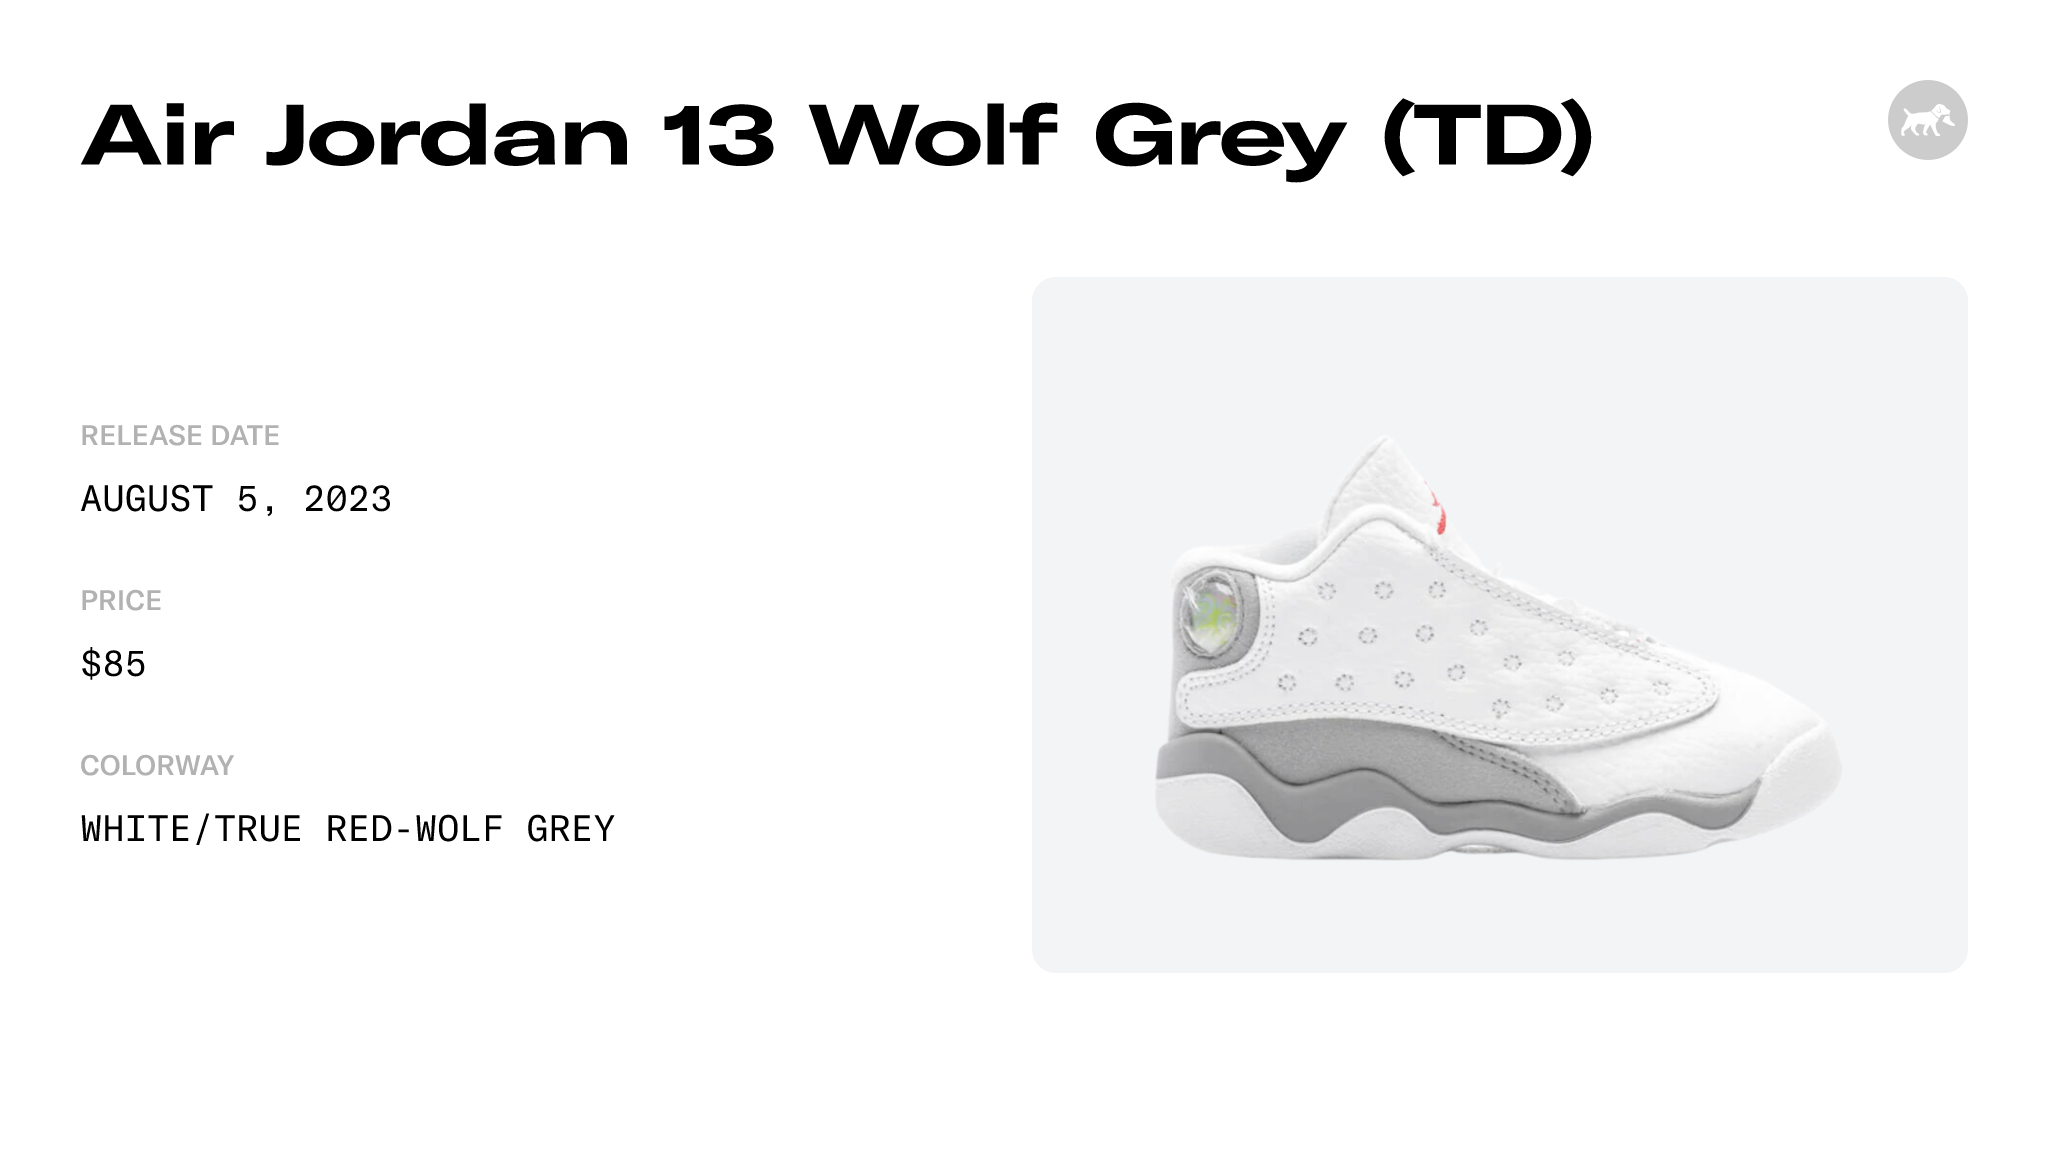 Air Jordan 13 Wolf Grey/Red 2023 Release Date